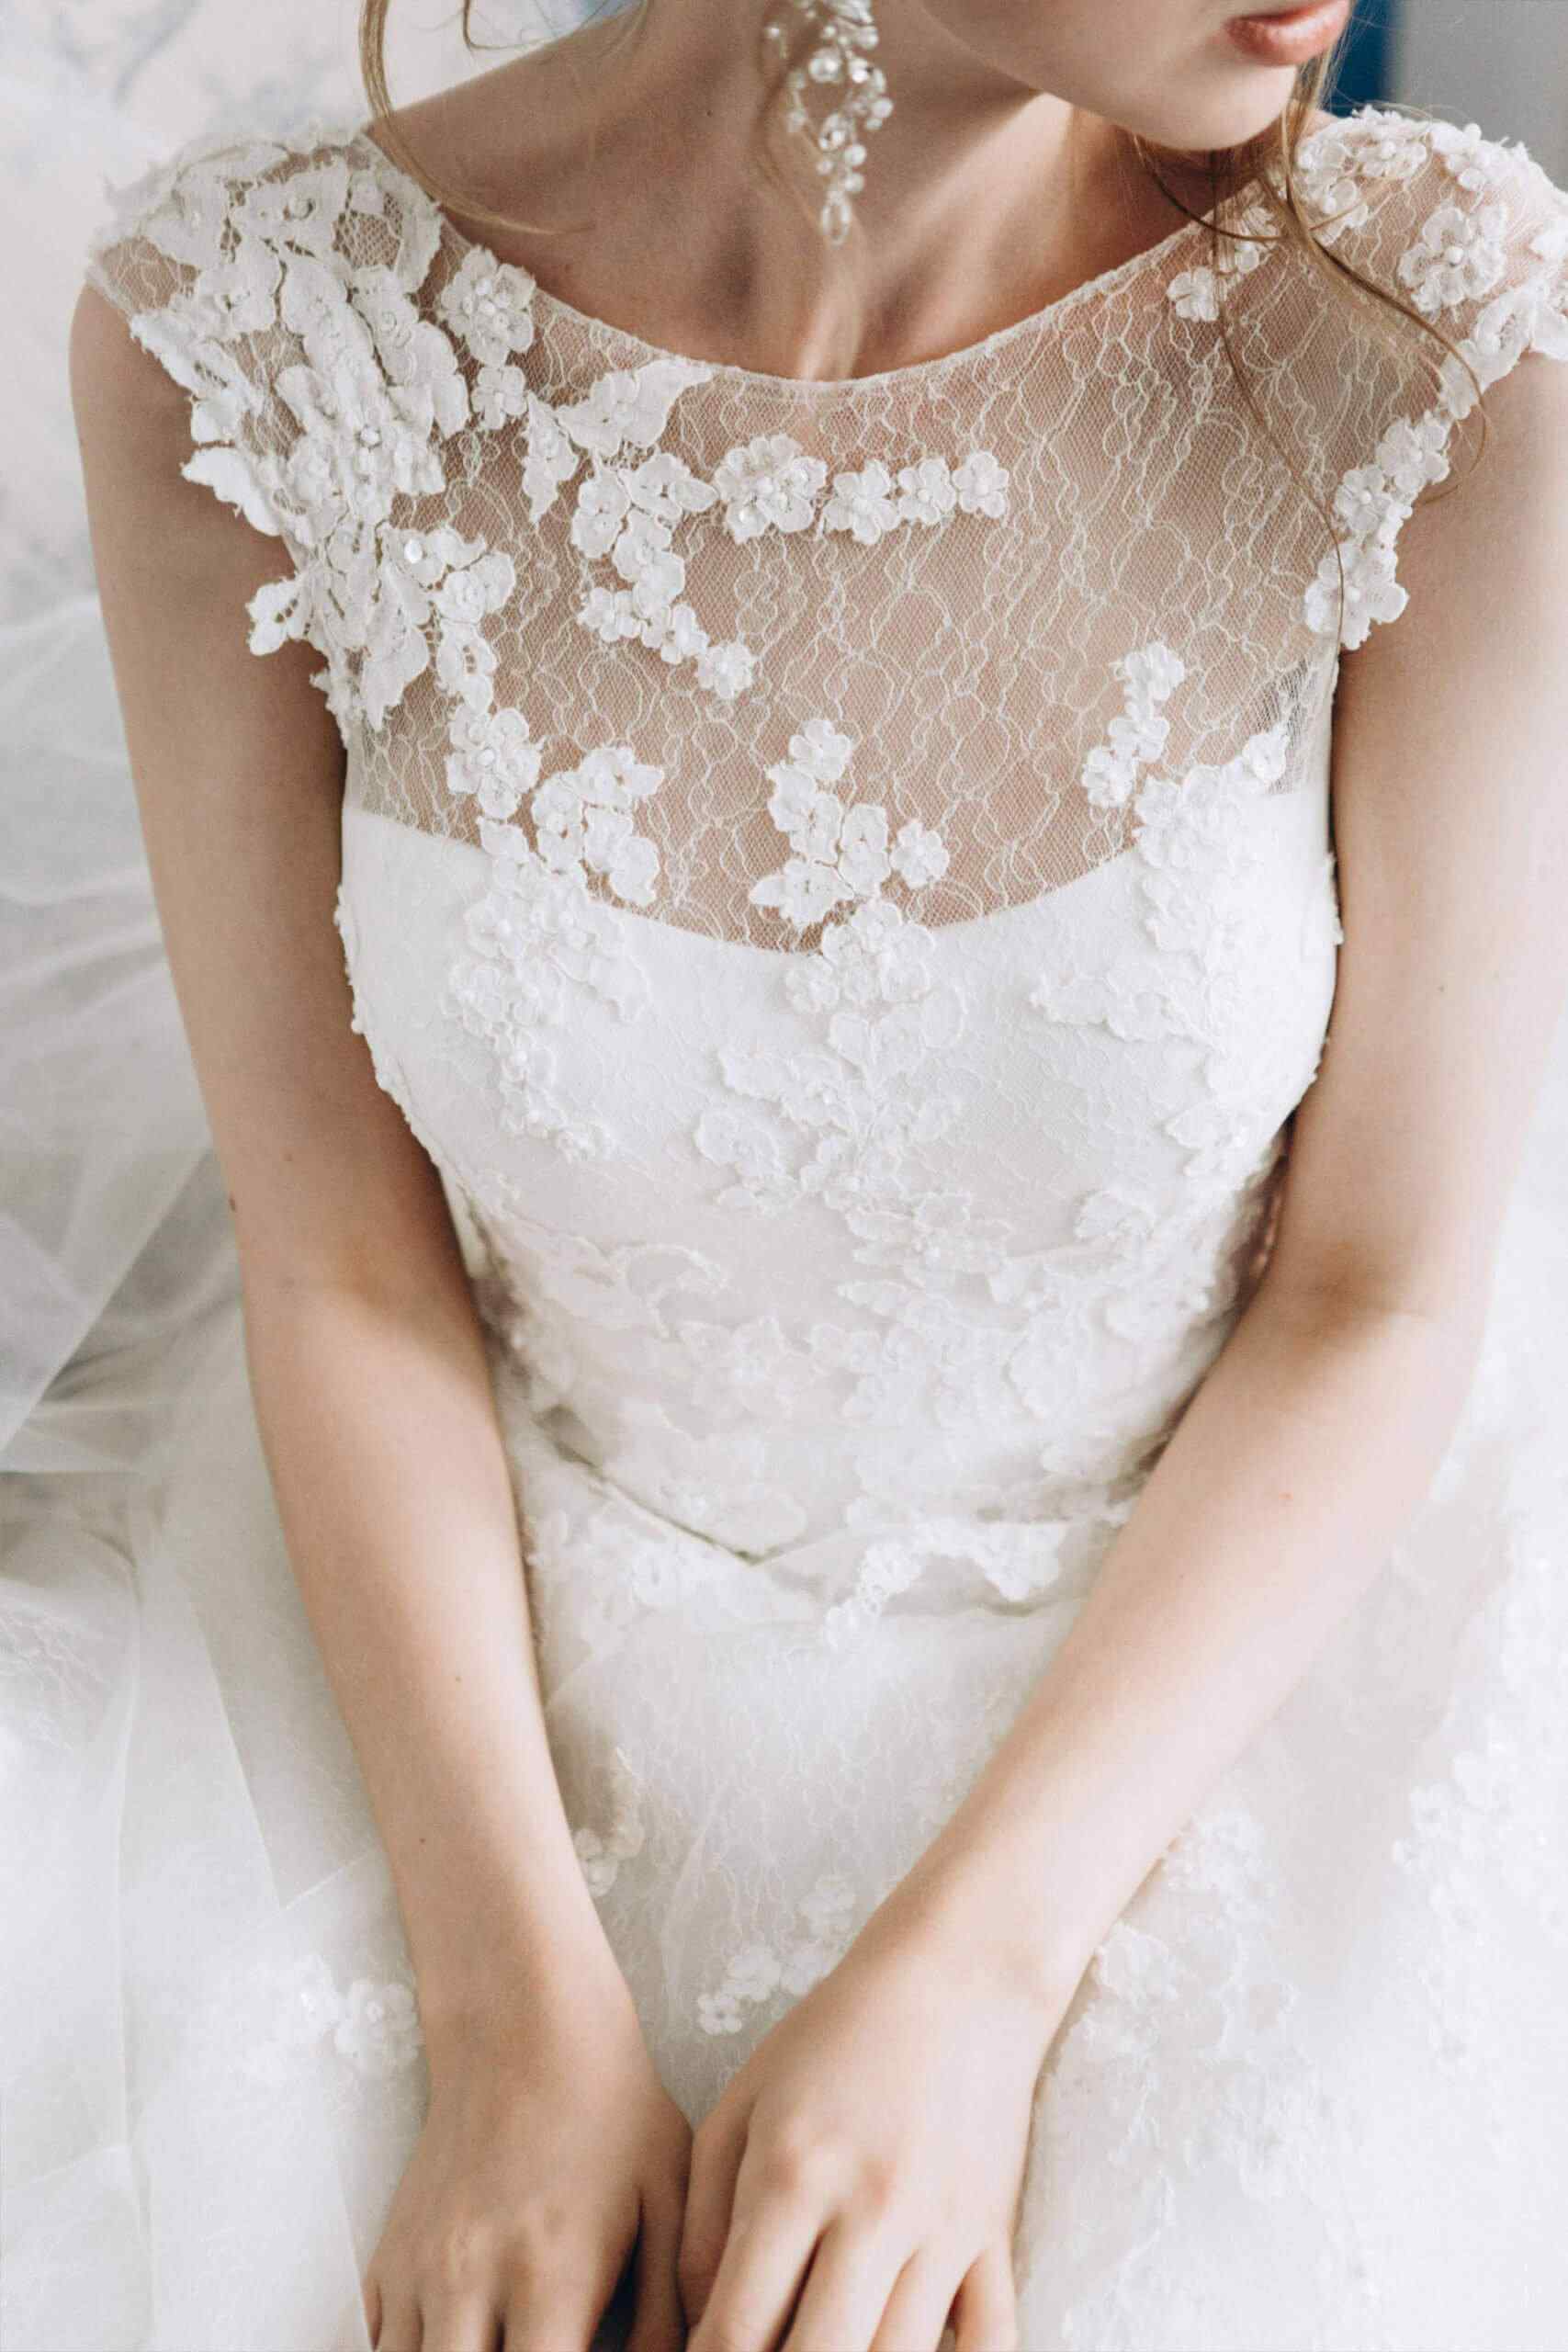 https://www.themansionml.com/wp-content/uploads/2020/11/wedding_dress_02-scaled-1.jpg